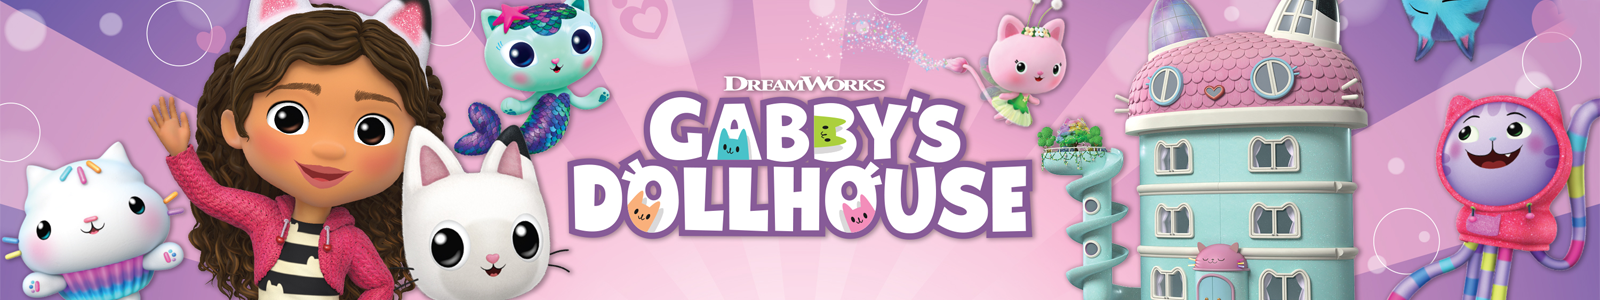 comprar gabby's dollhouse online